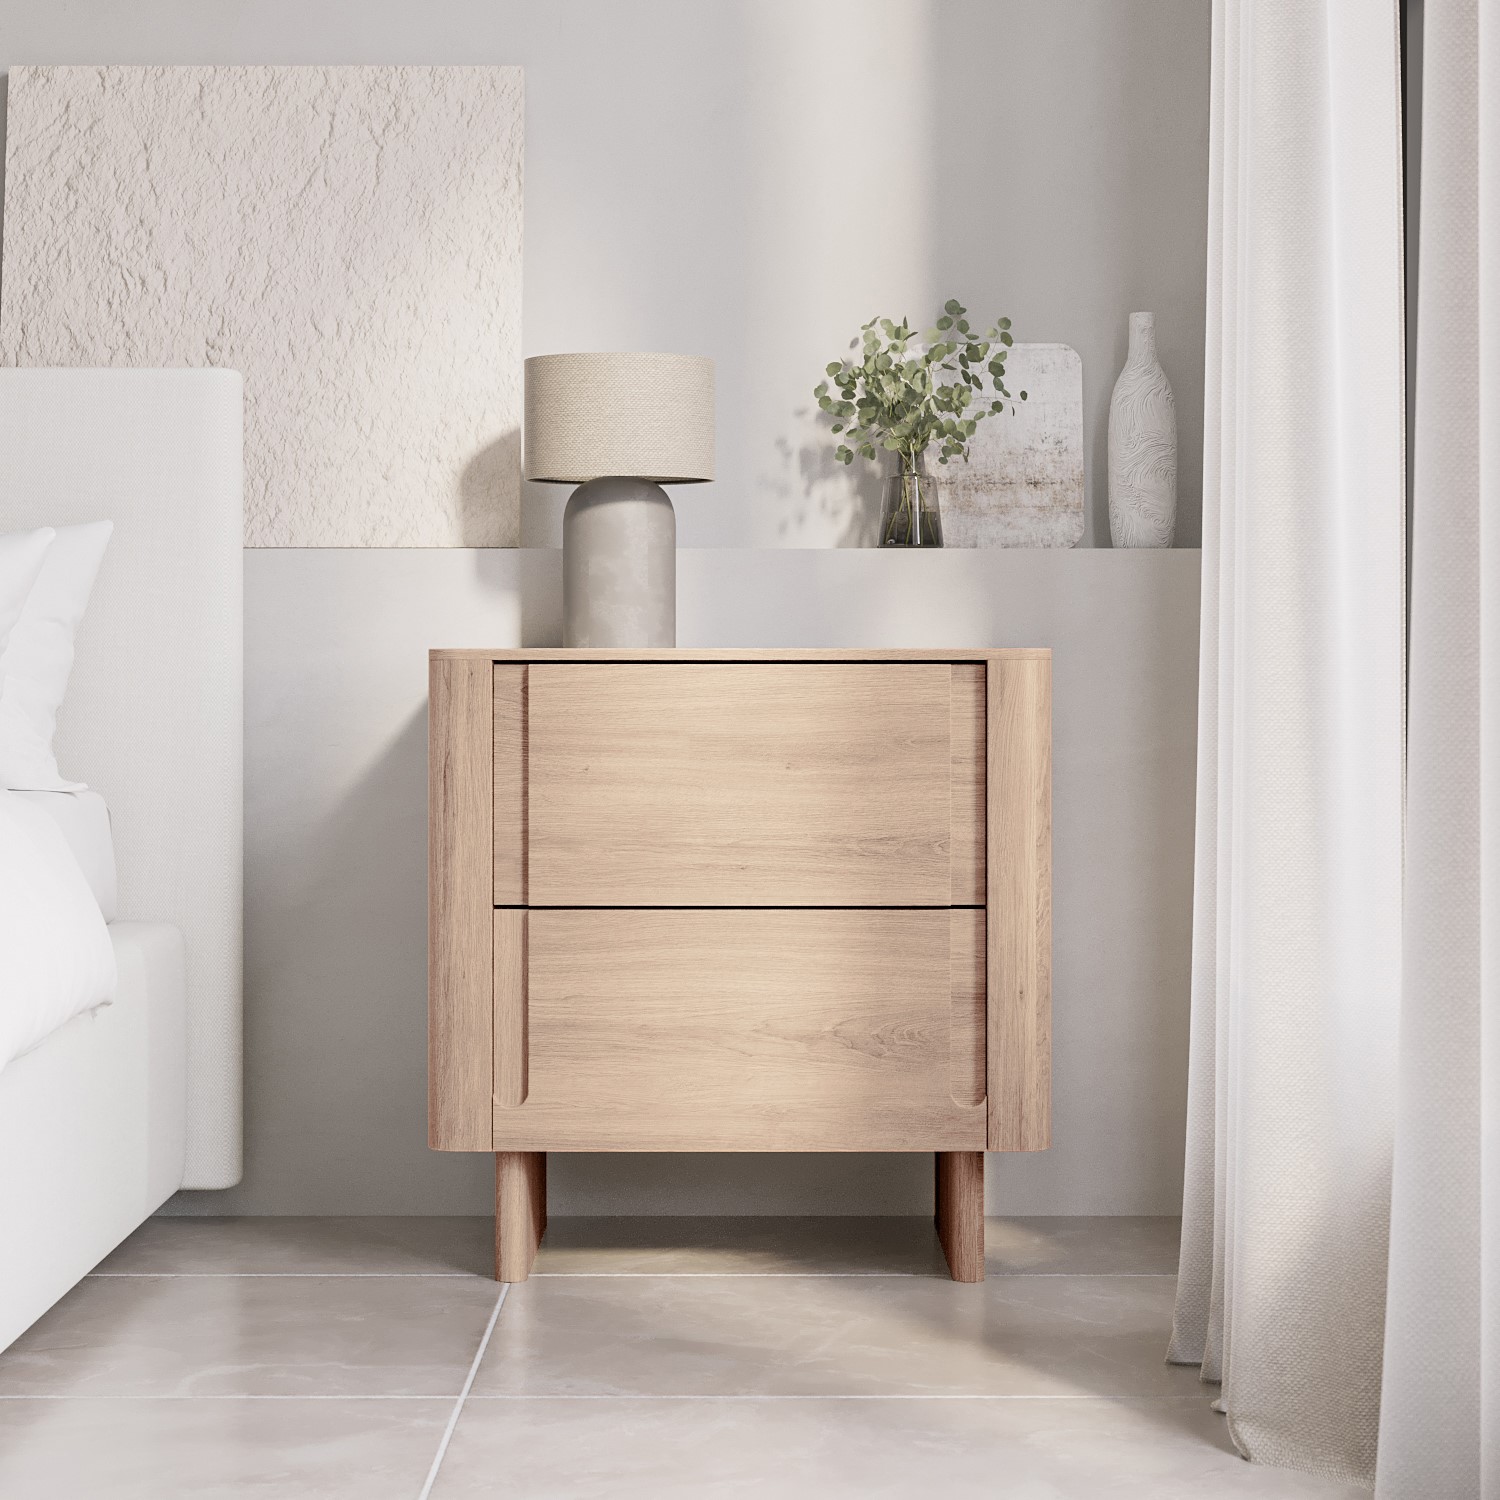 Photo of Light wood mid century 2 drawer bedside table - emile sustainable furniture